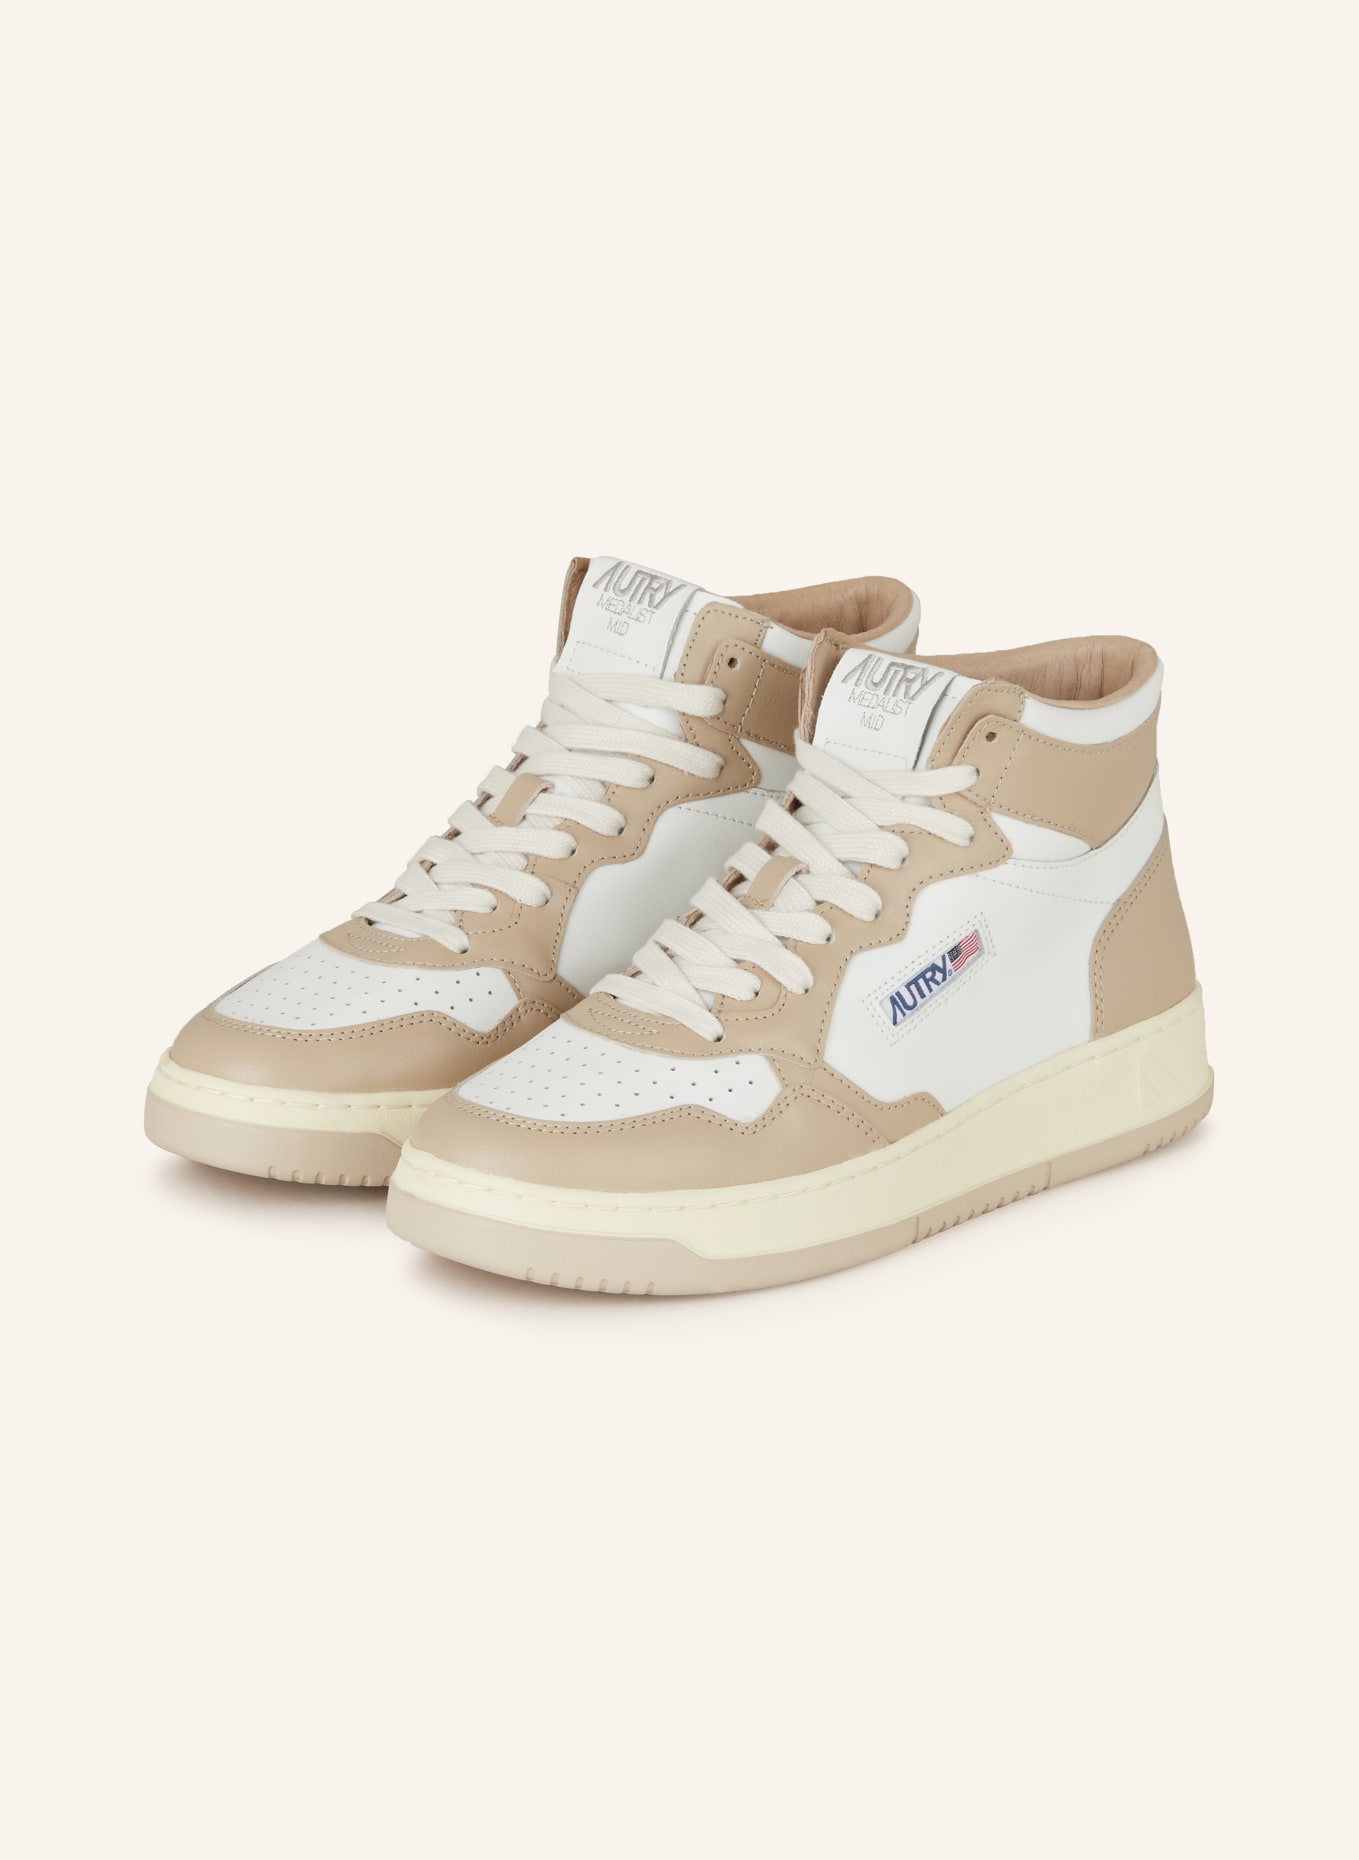 AUTRY Hightop-Sneaker MEDALIST MID, Farbe: WEISS/ BEIGE (Bild 1)